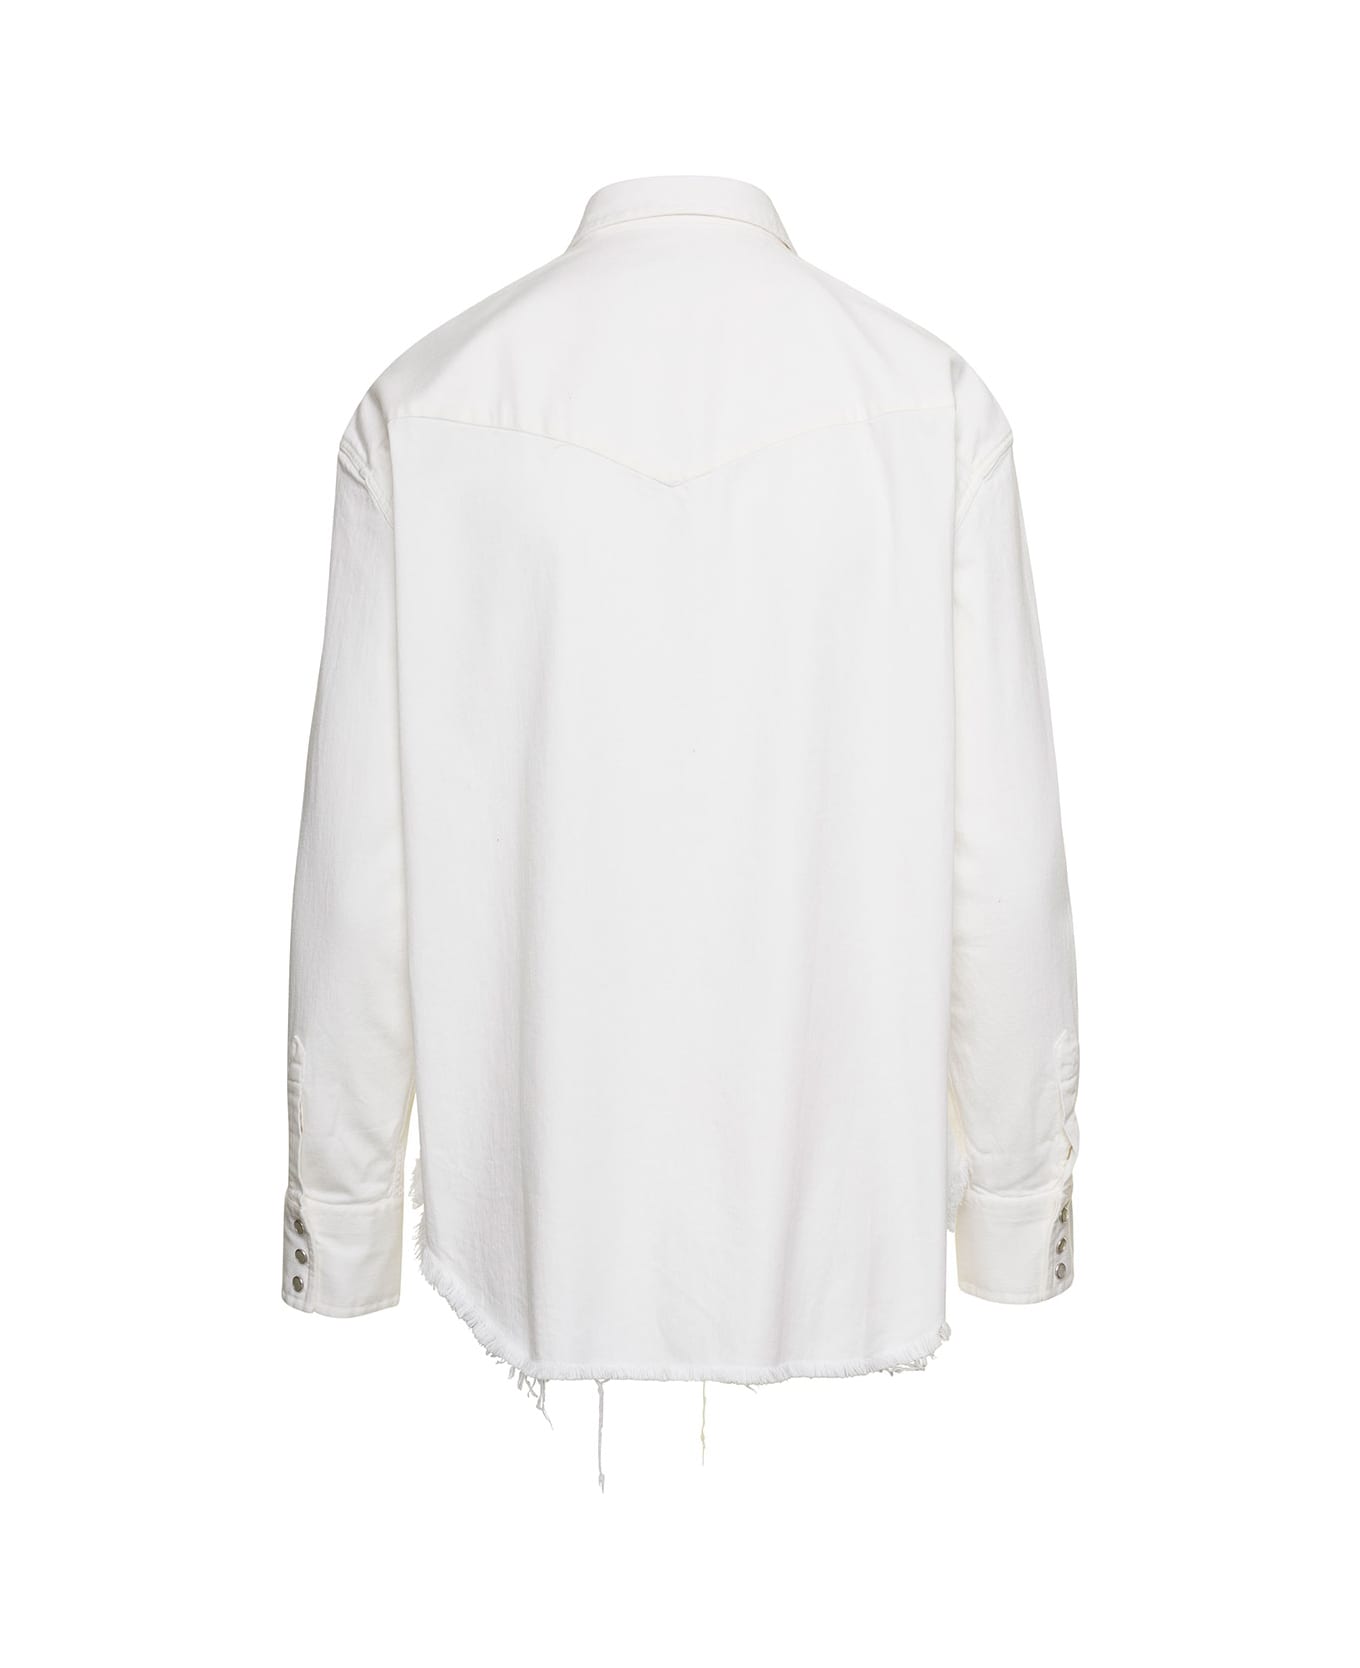 Washington Dee-Cee White Denim Shirt With Stud Embellishment In Cotton Woman - White